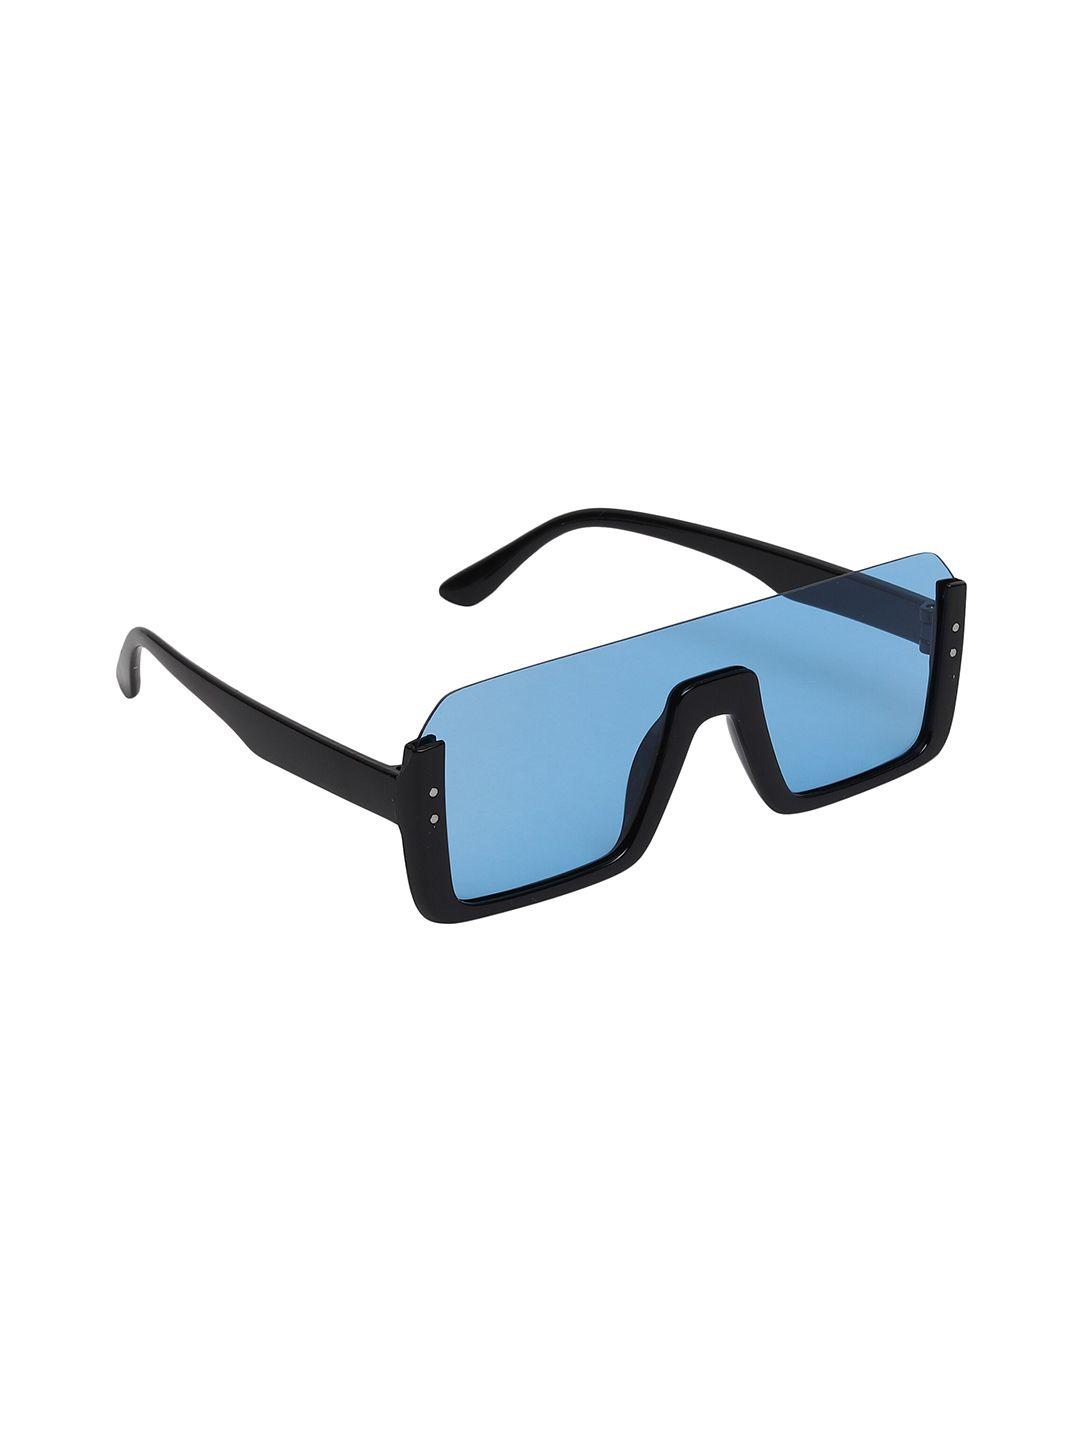 epicink hob shield sunglasses with uv protected lens epsg-moon flash-07